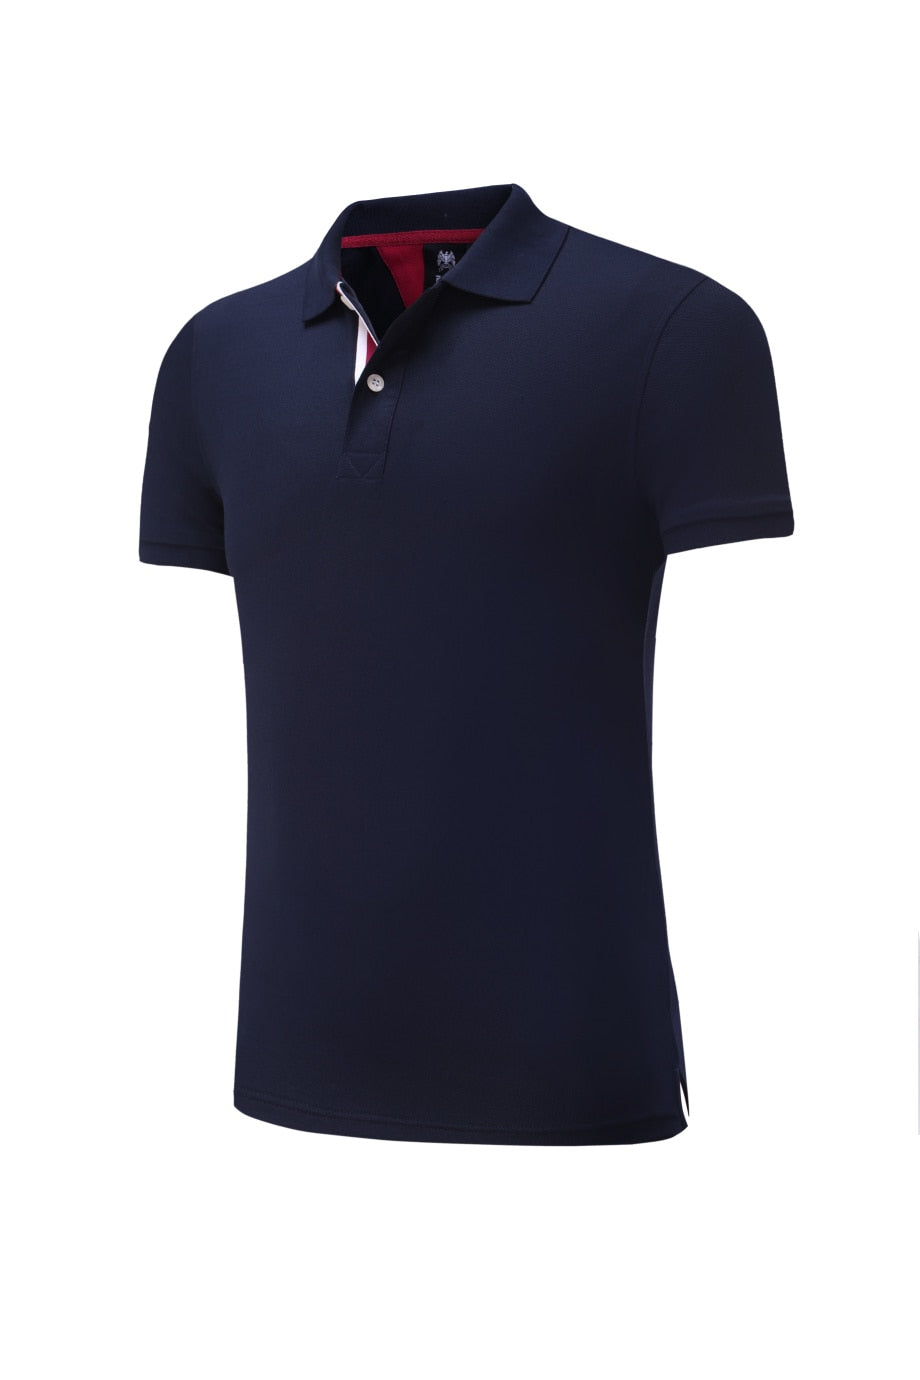 Golf Short Sleeve Training Fitness Summer Turn-down Collar Polo T shirt The Clothing Company Sydney